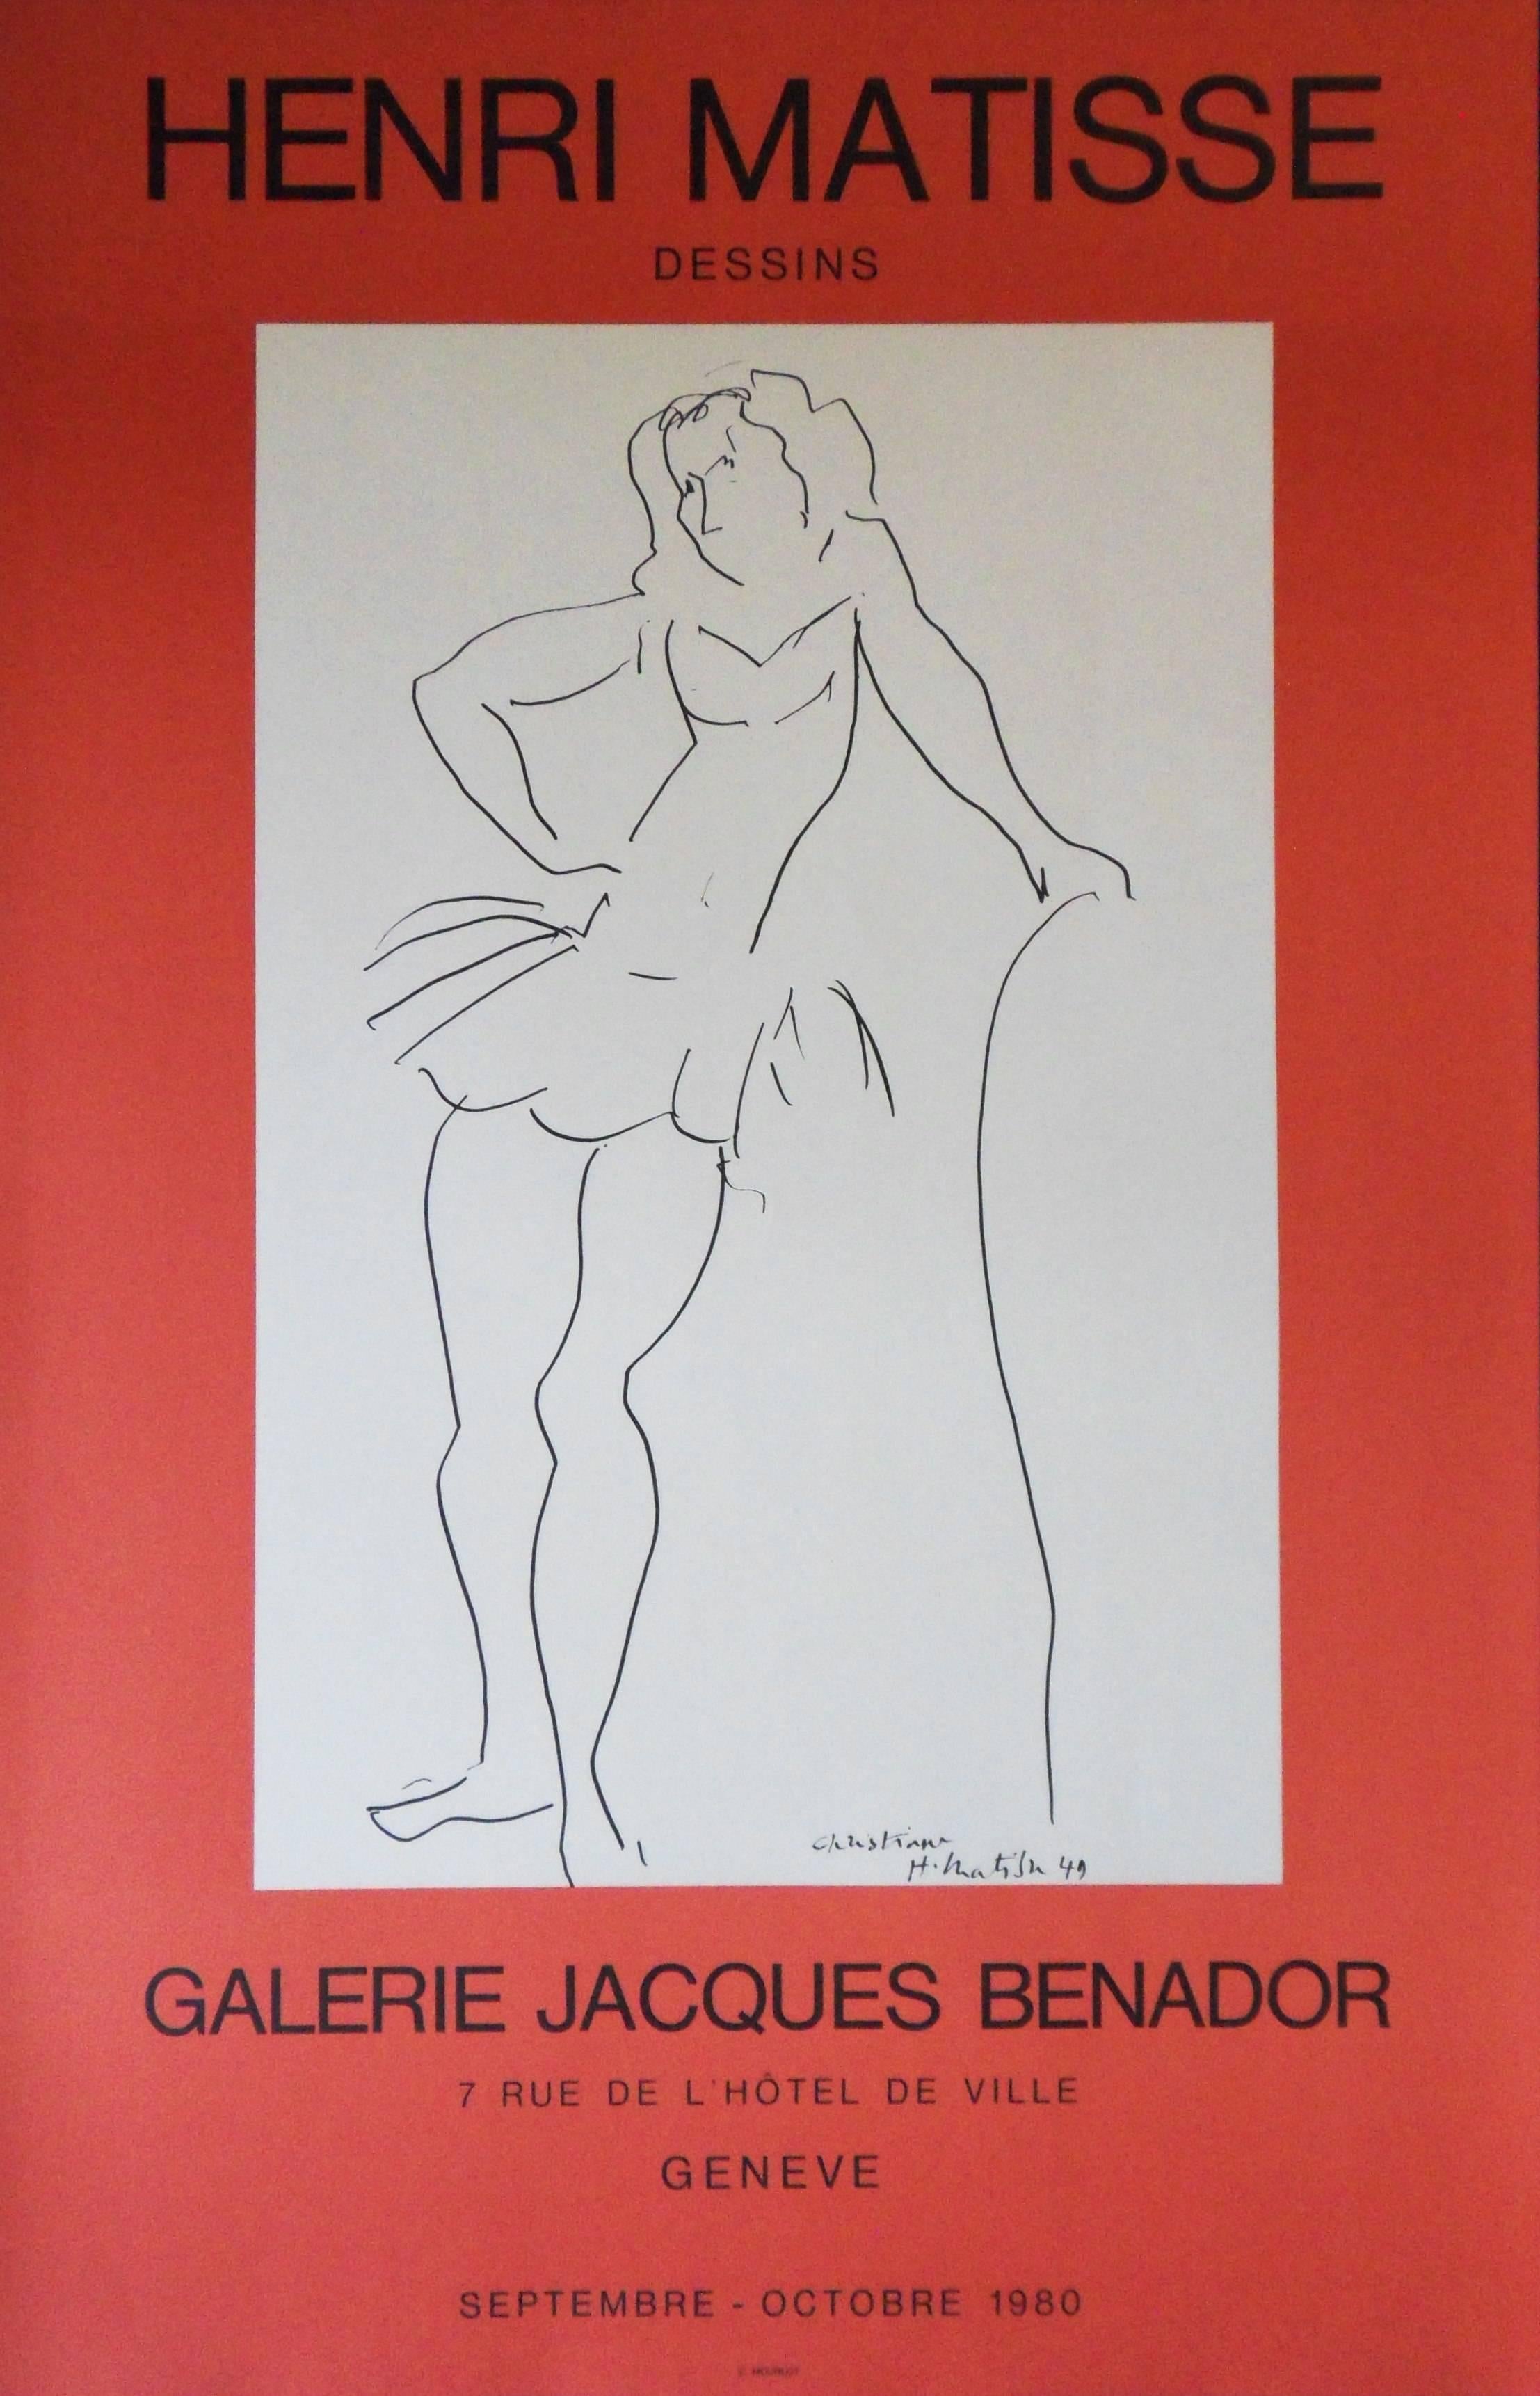 Henri Matisse Figurative Print - Christiane : Dancer - Lithograph Poster - Galerie Jacques Benador #Mourlot